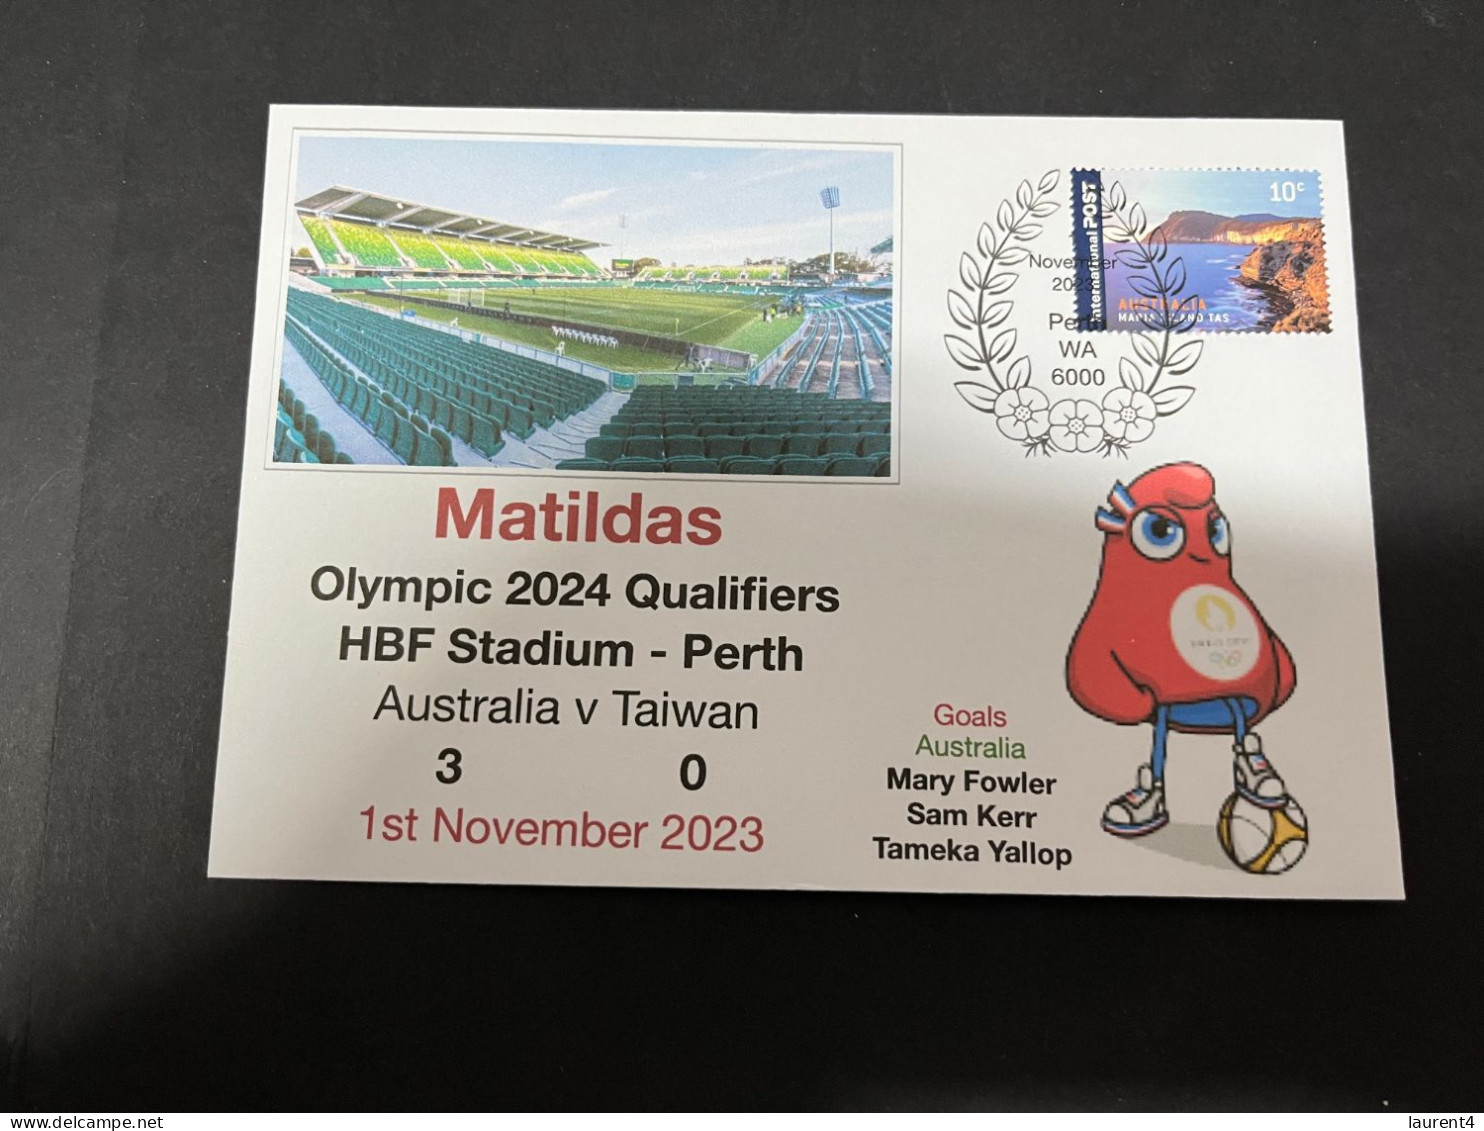 3-11-2023 (1 V 13) Australia (3) V Taiwan (0) - Matildas Olympic 2024 Qualifiers (match 3) 1-11-2023 In Perth - Verano 2024 : París